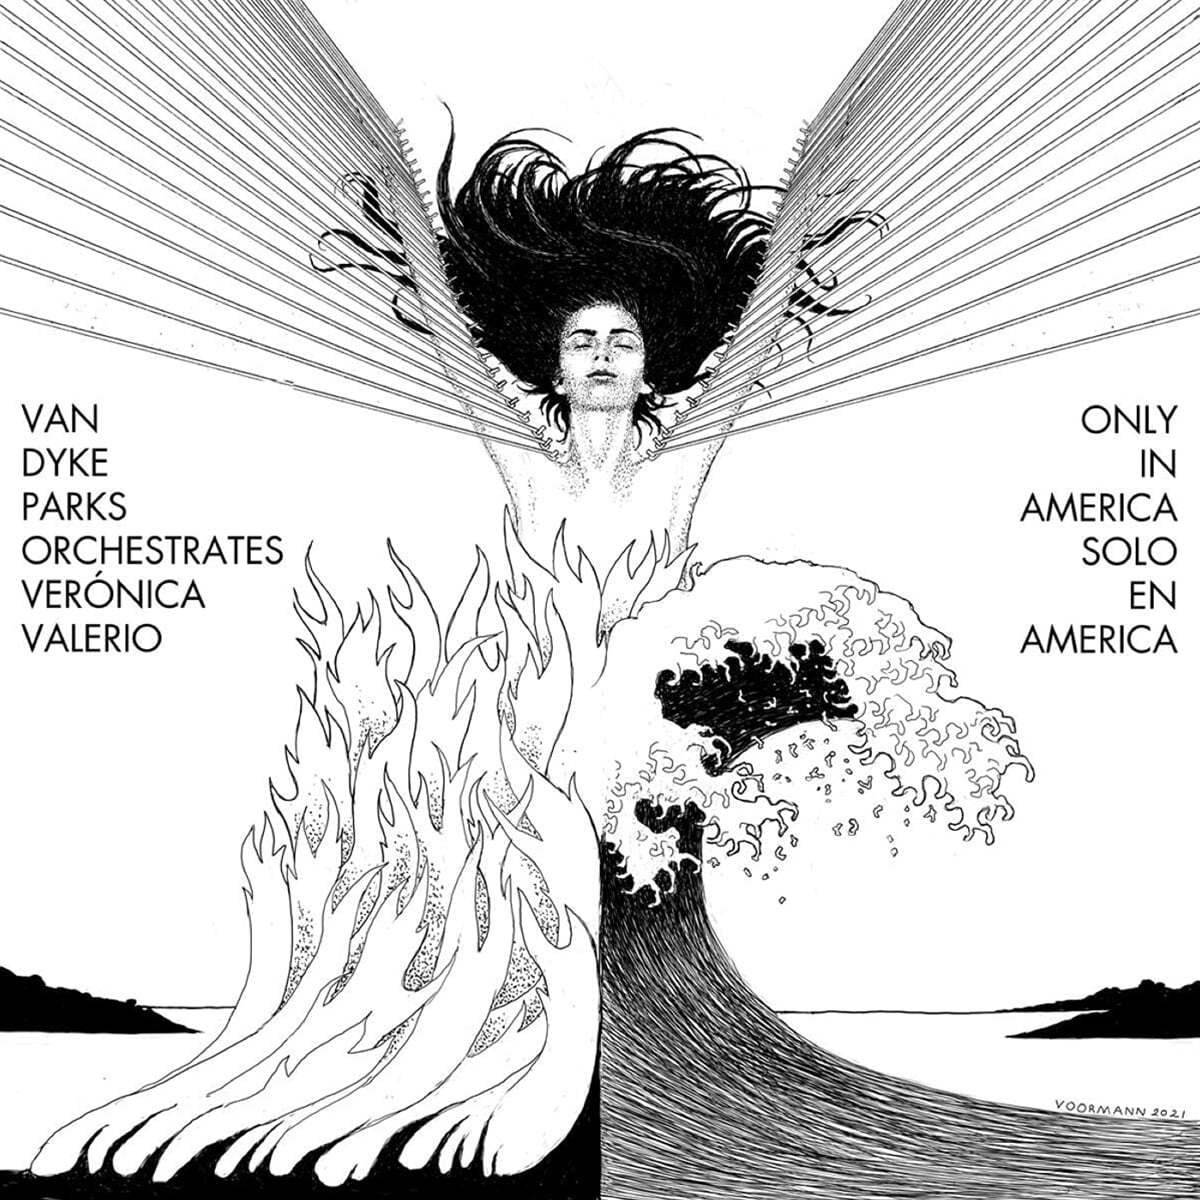 Van Dyke Parks Orchestrates Veronica Valerio - Only In America Solo En America [LP]